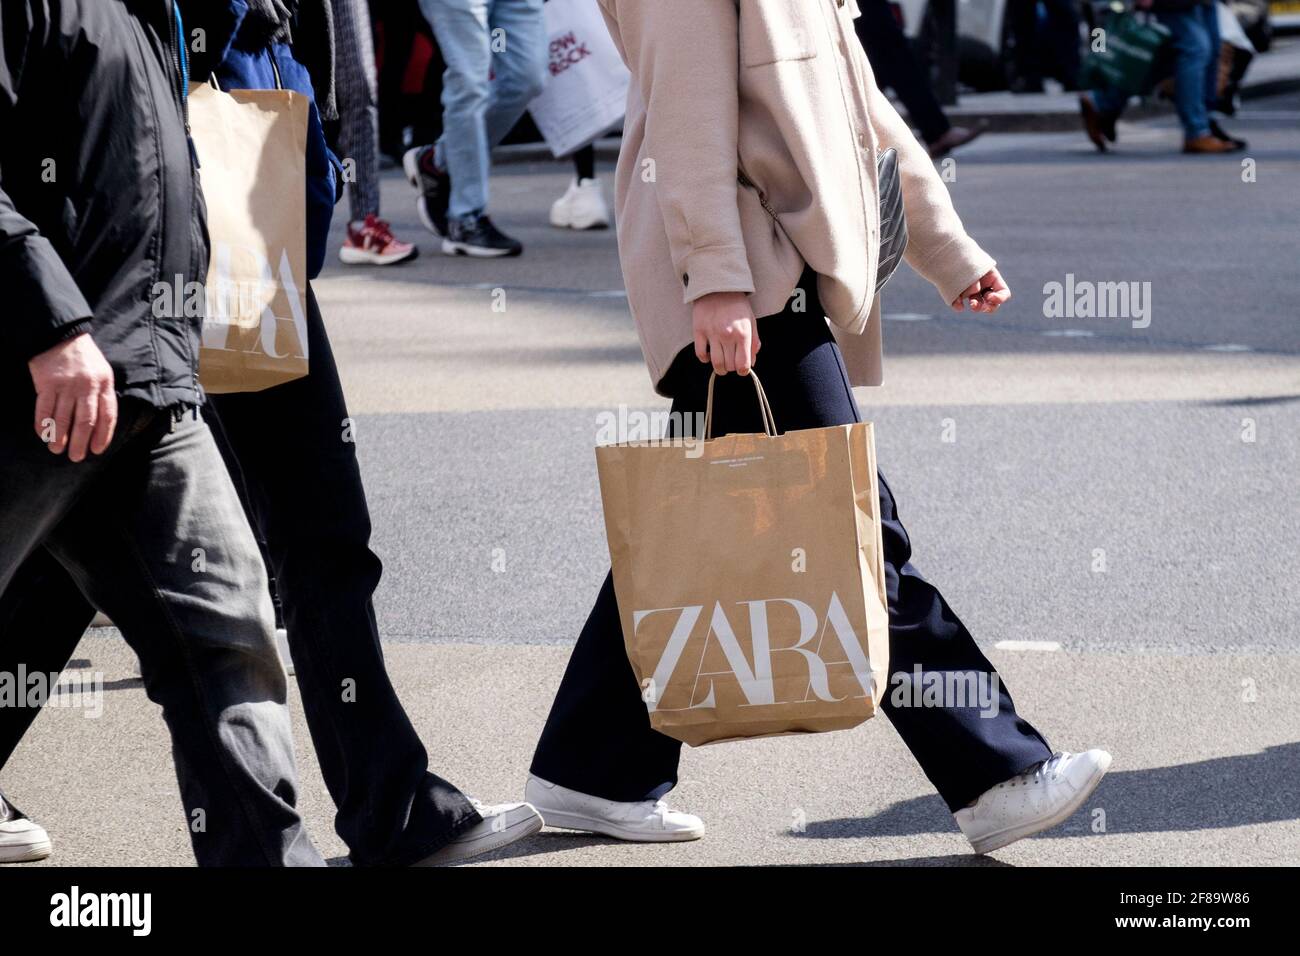 Cabas avec sac à vêtements Zara, Londres, Royaume-Uni Photo Stock - Alamy